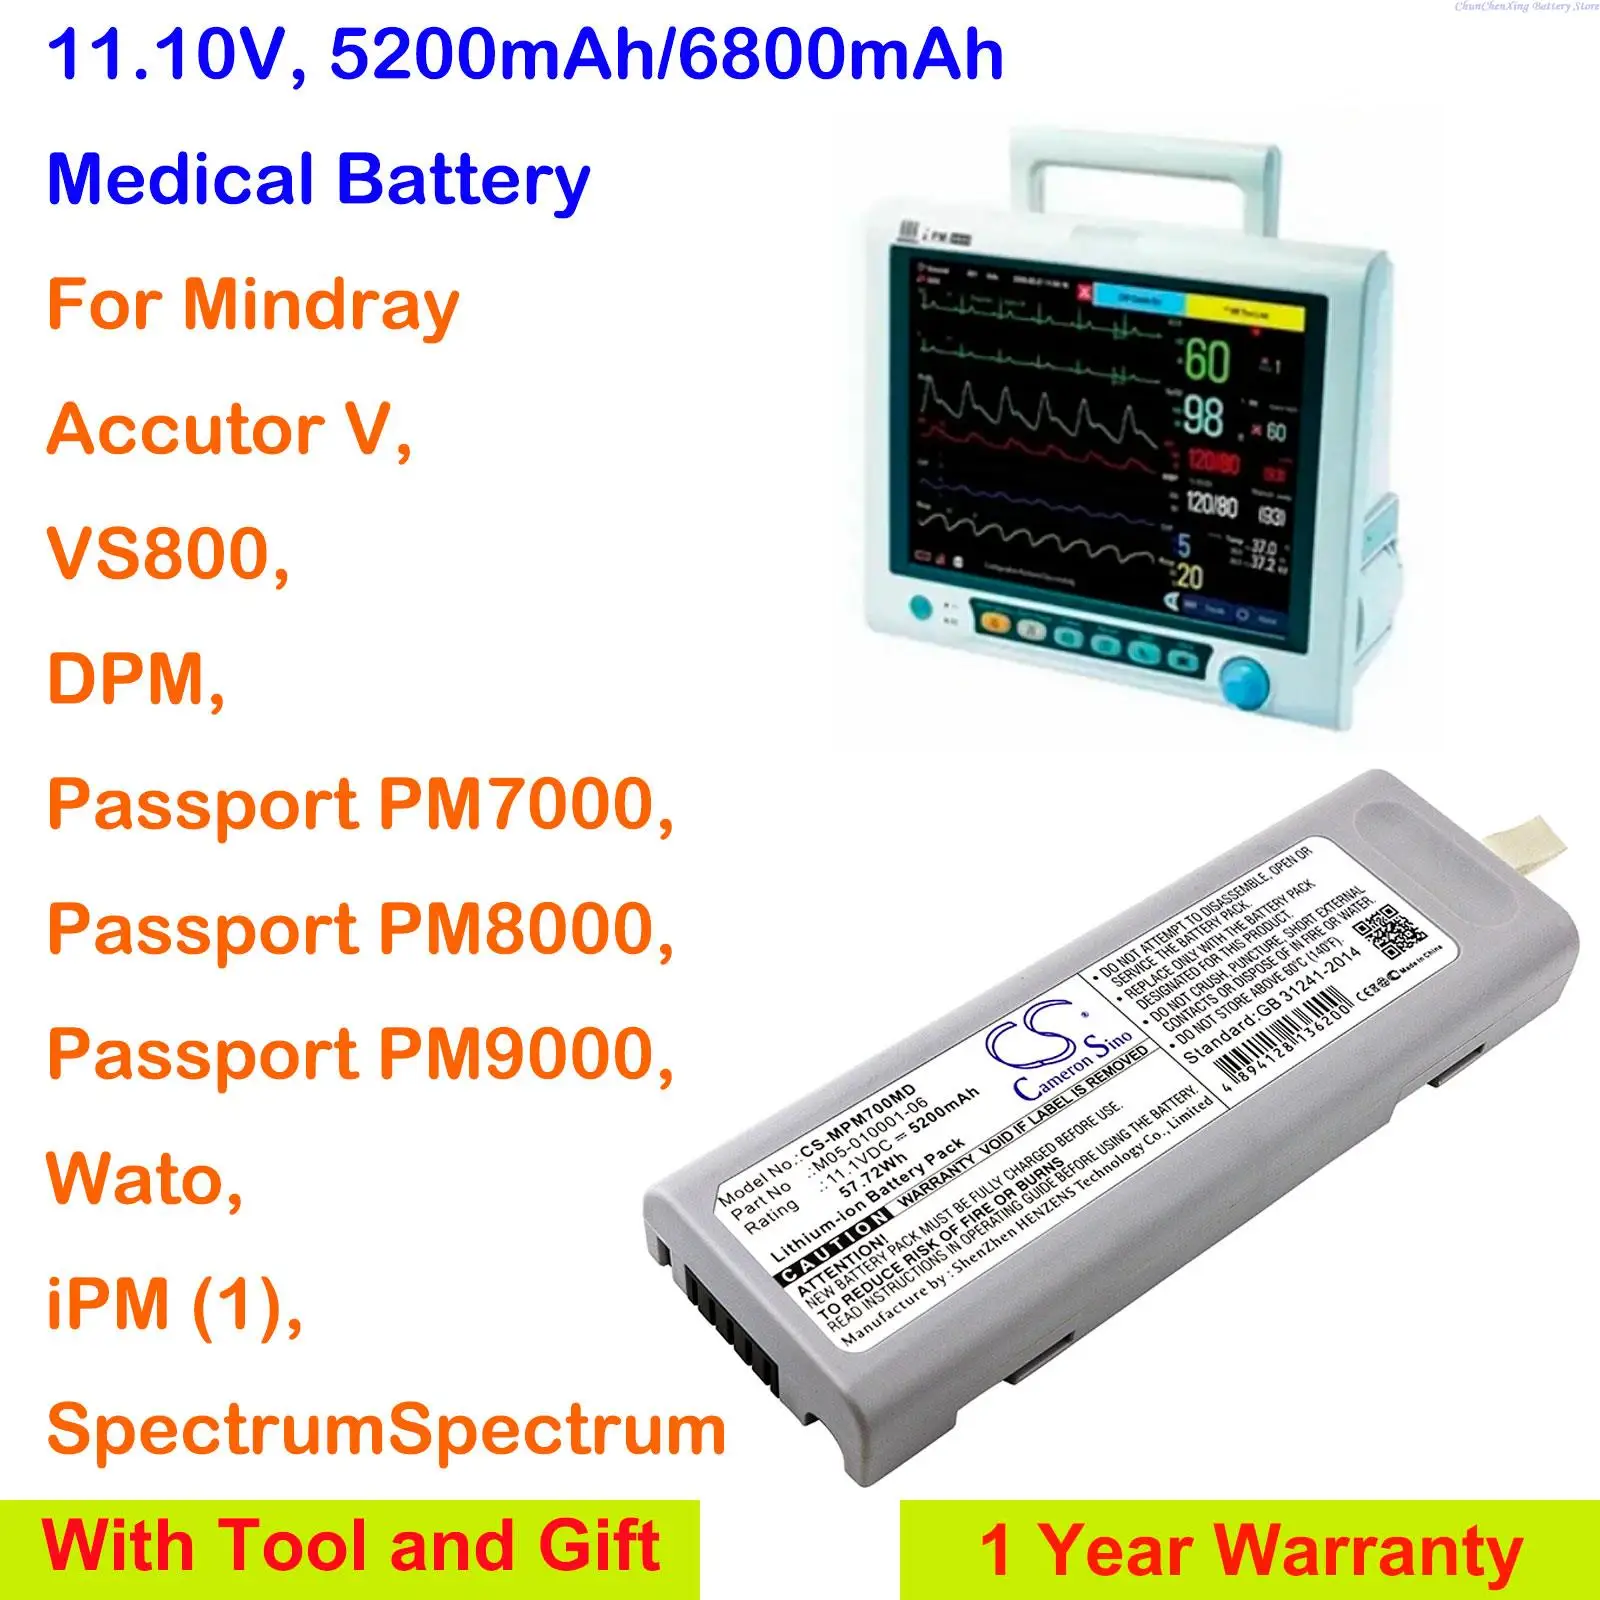 

Cameron Sino 5200mAh/6800mAh Battery for Mindray Accutor V,VS800,DPM,Passport PM7000,PM8000,PM9000,Wato,iPM(1),SpectrumSpectrum,